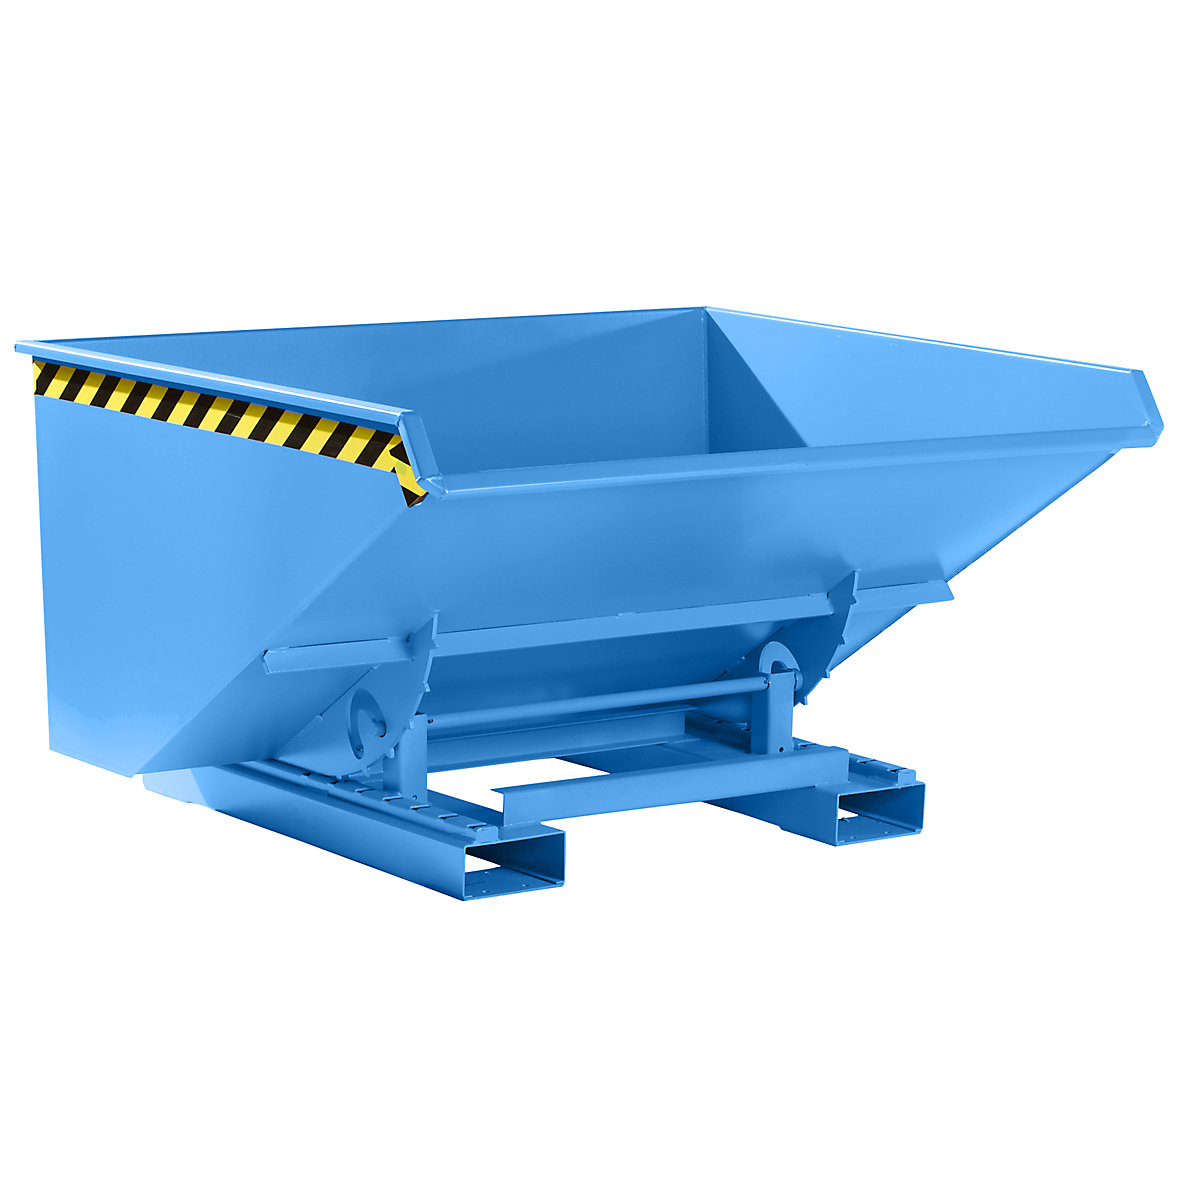 EUROKRAFTpro Kippbehälter inkl. Abrollmechanismus, Volumen 0,9 m³, LxBxH 1260 x 1570 x 835 mm, blau